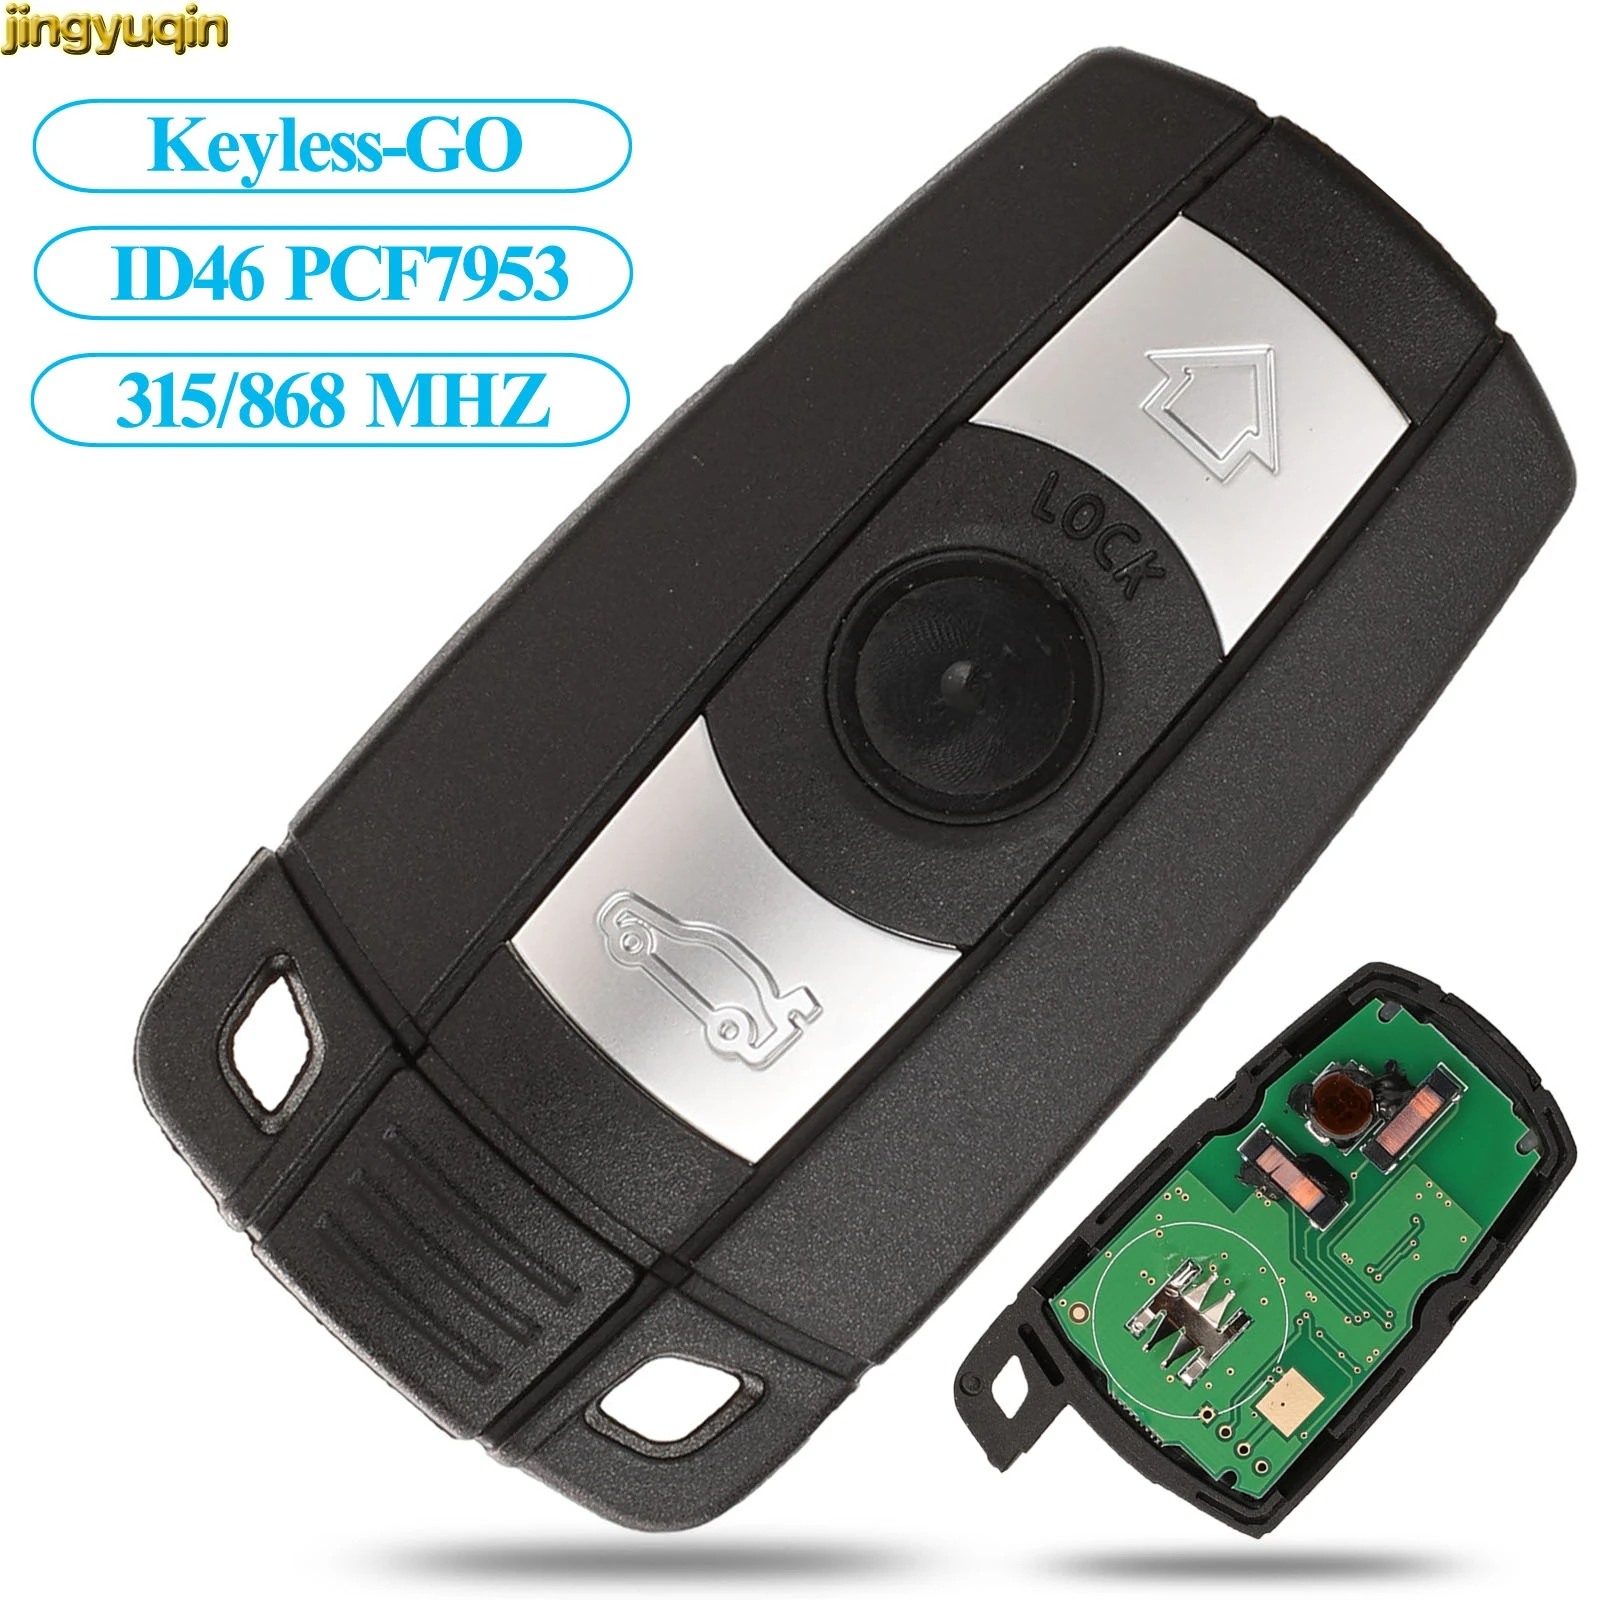 Jingyuqin Keyless-Go Smart Car Key 315/868 MHZ ID46 PCF7953 For BMW 3 5 Series CAS3 X5 X6 Z4 Remote Comfort Access Hands-Free